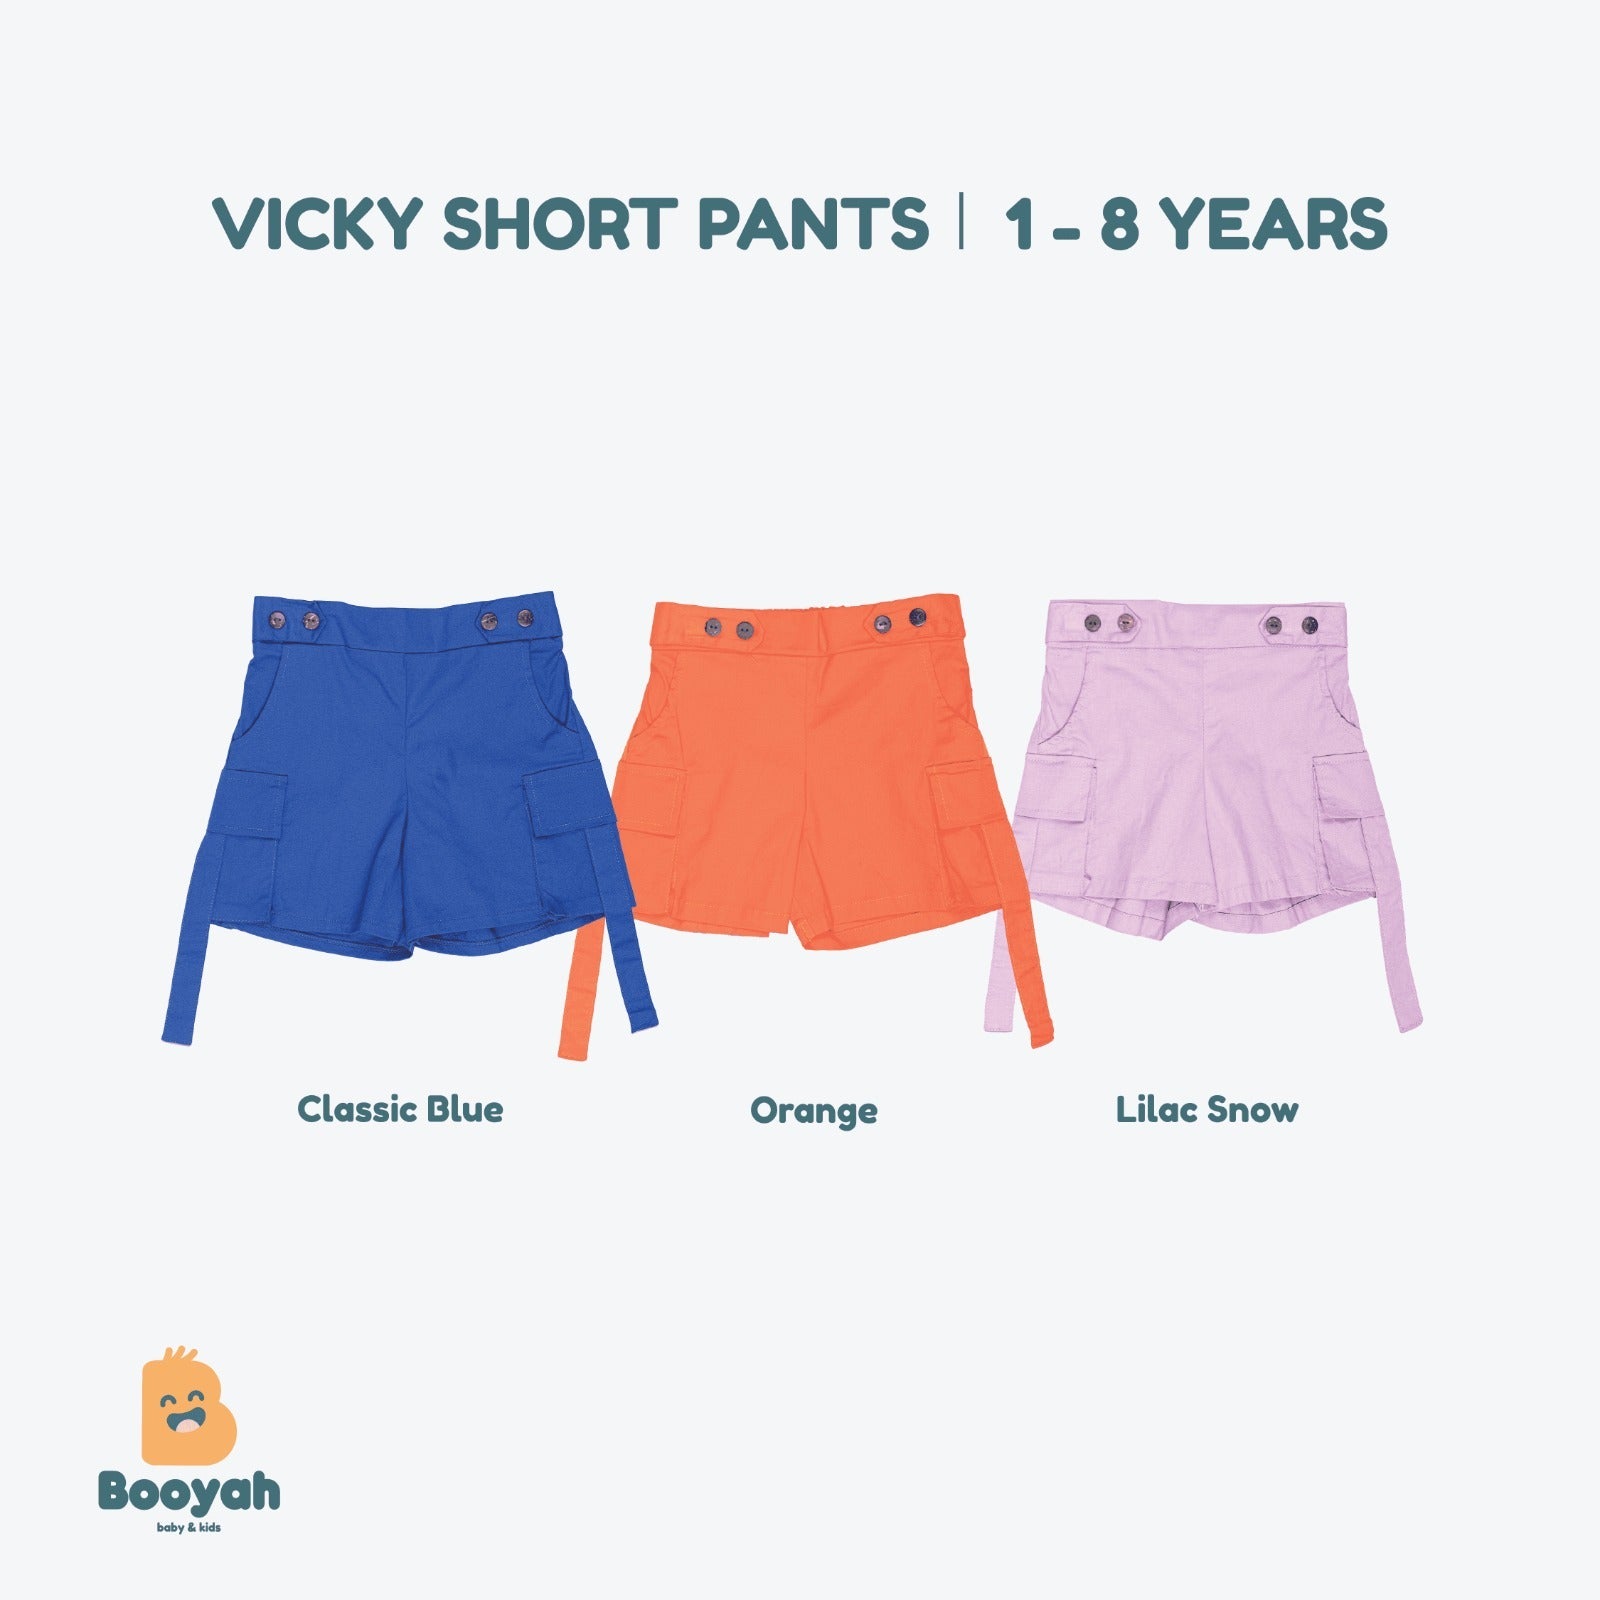 Booyah Baby & Kids Vicky Short Pants